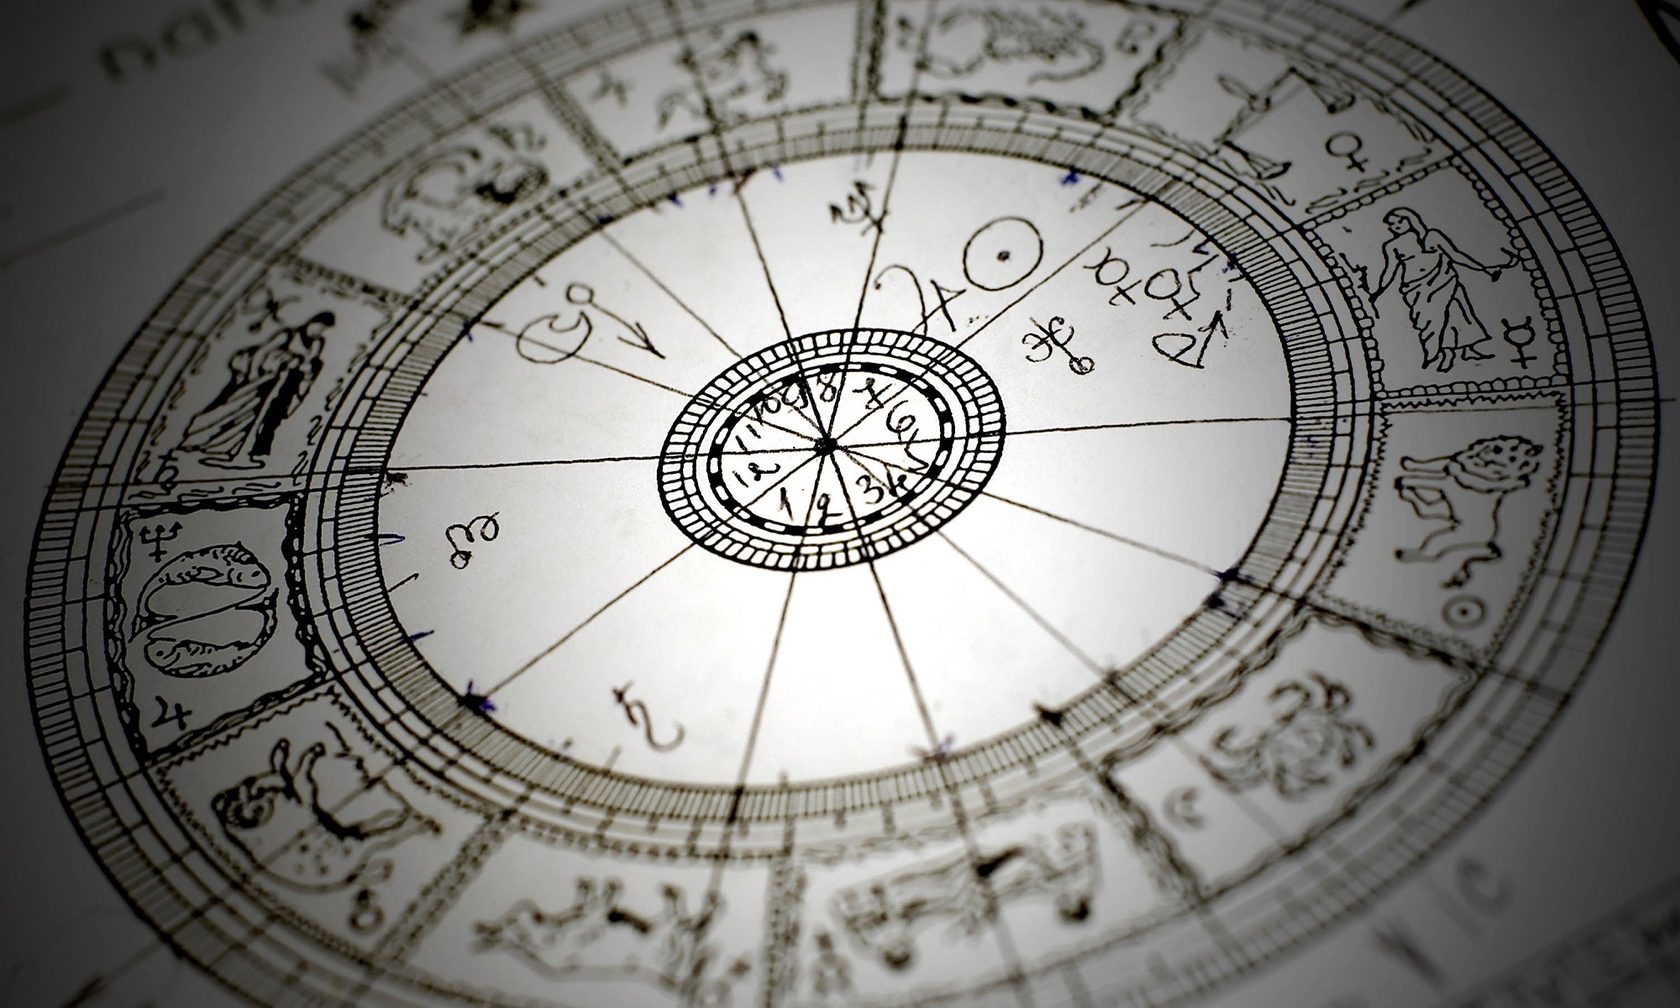 Натальная астрология